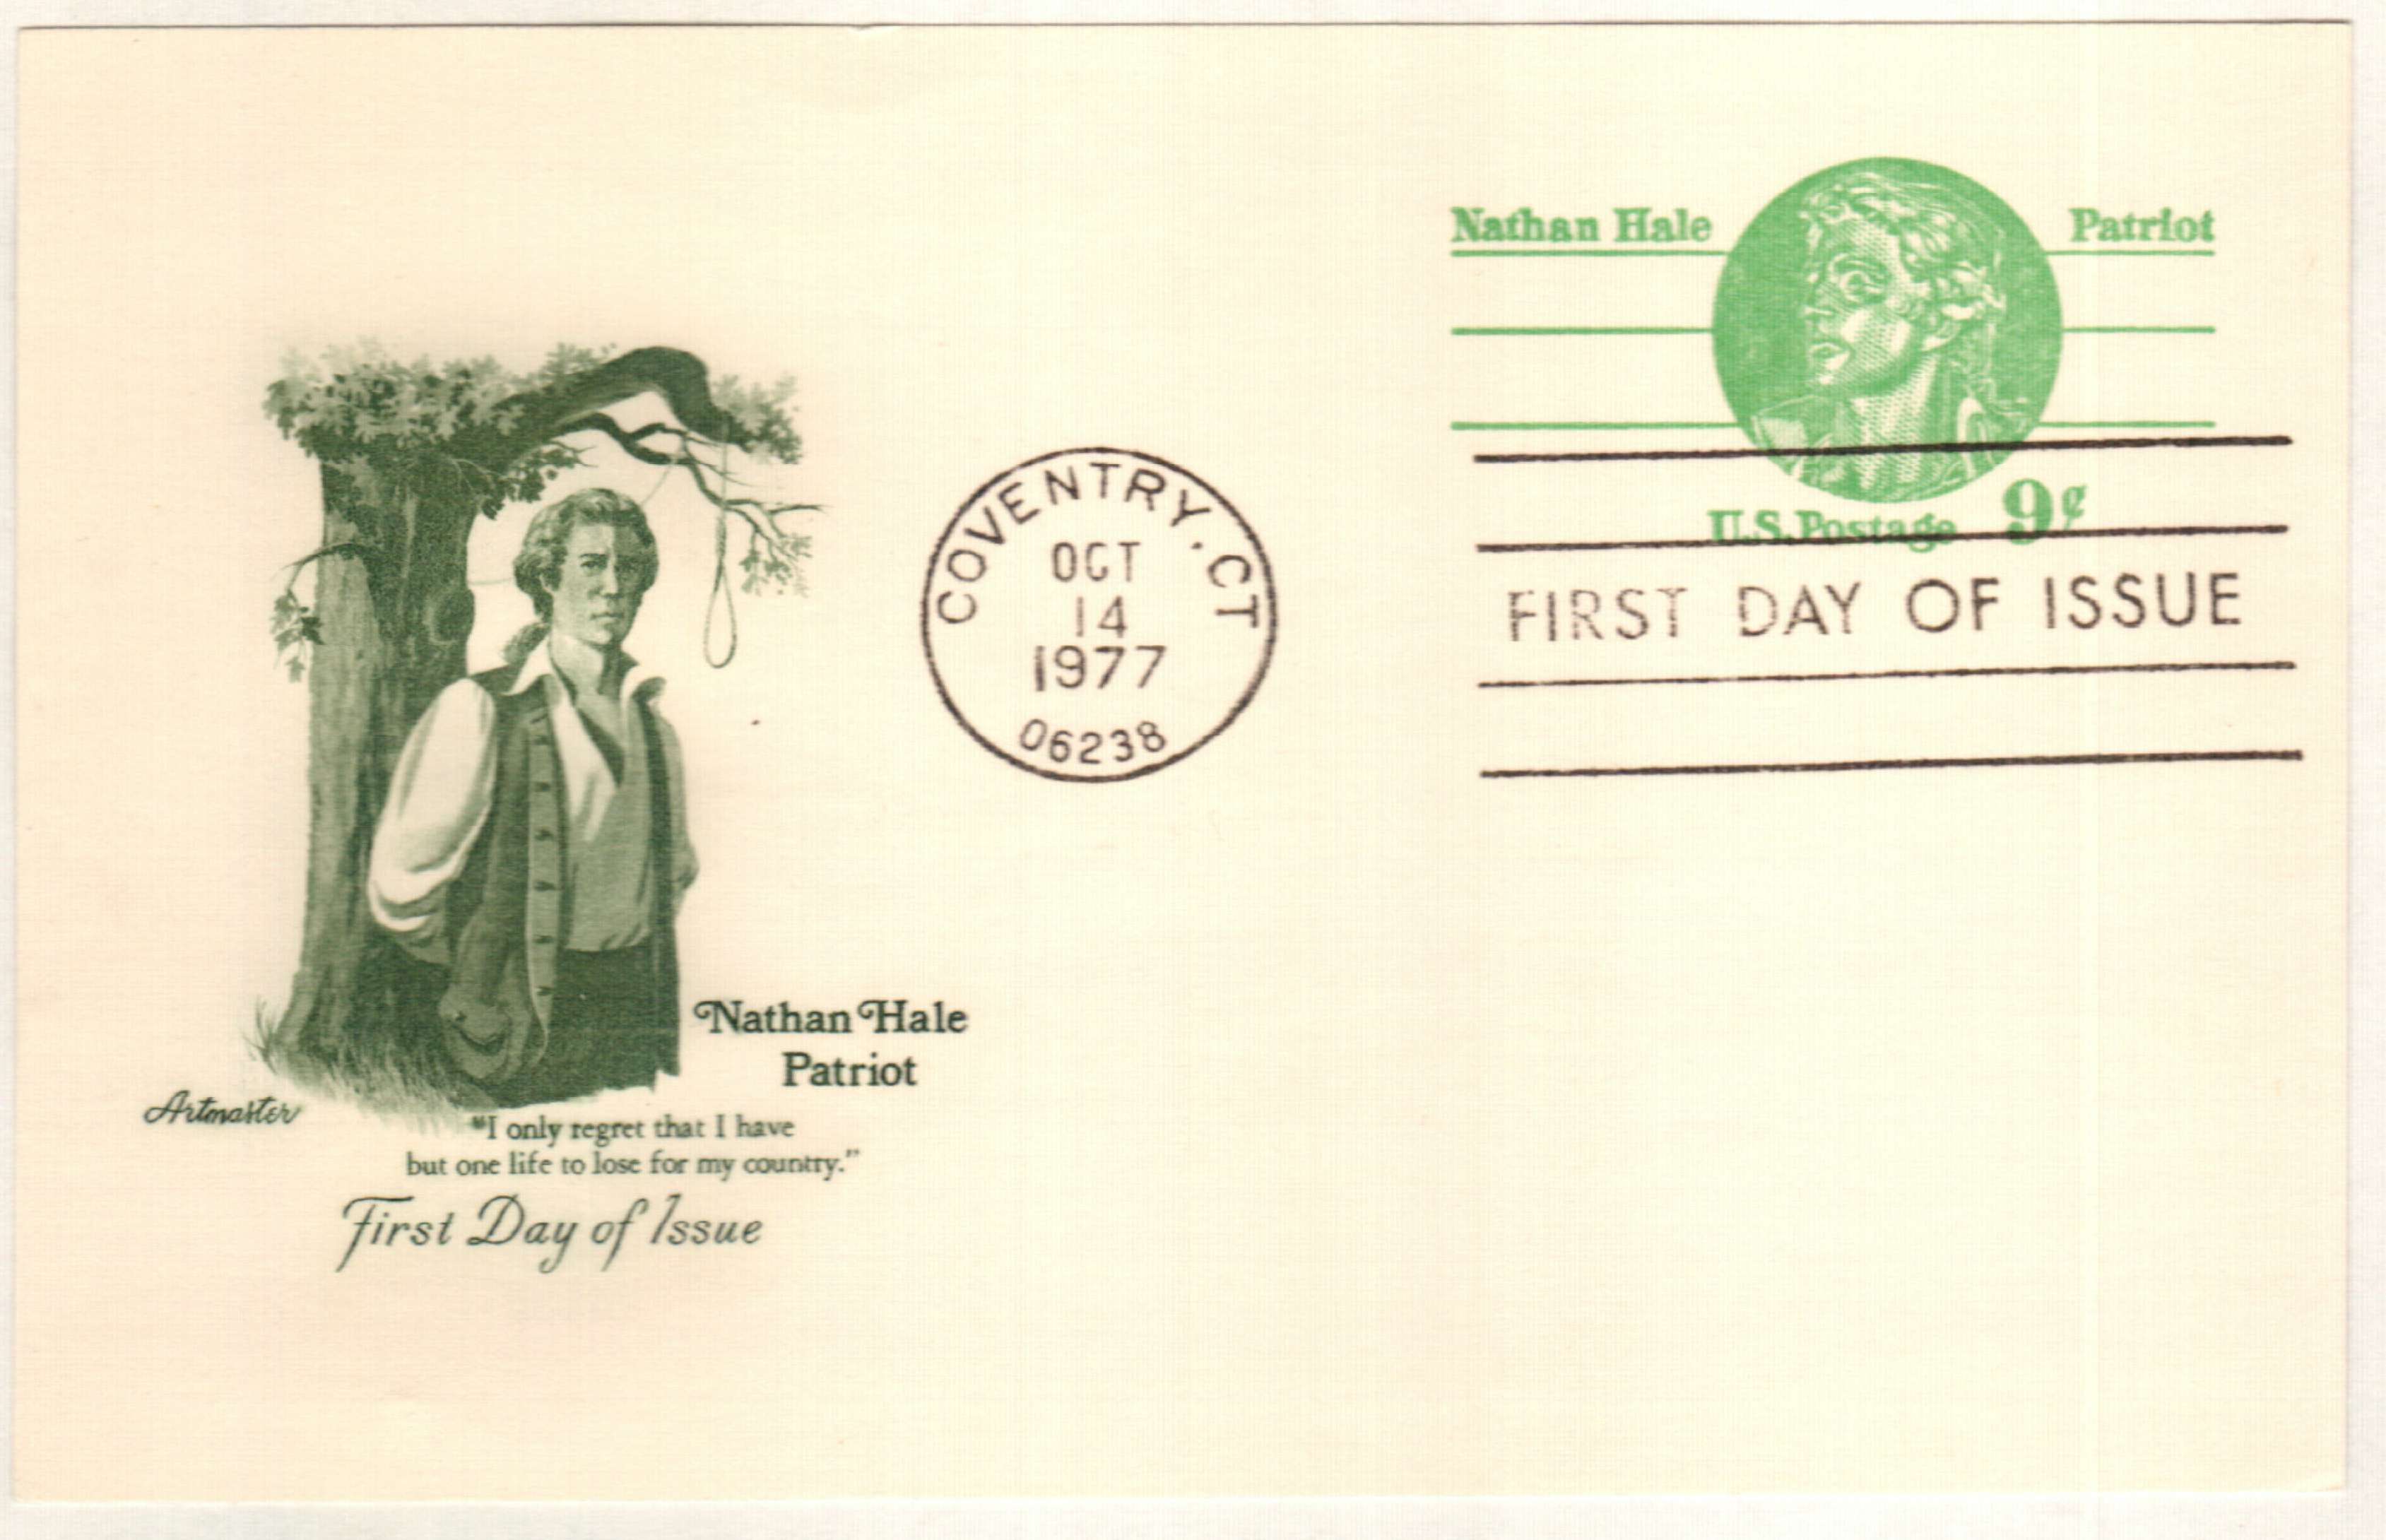 U.S. #UX72 – Postal card depicting Hale’s death.